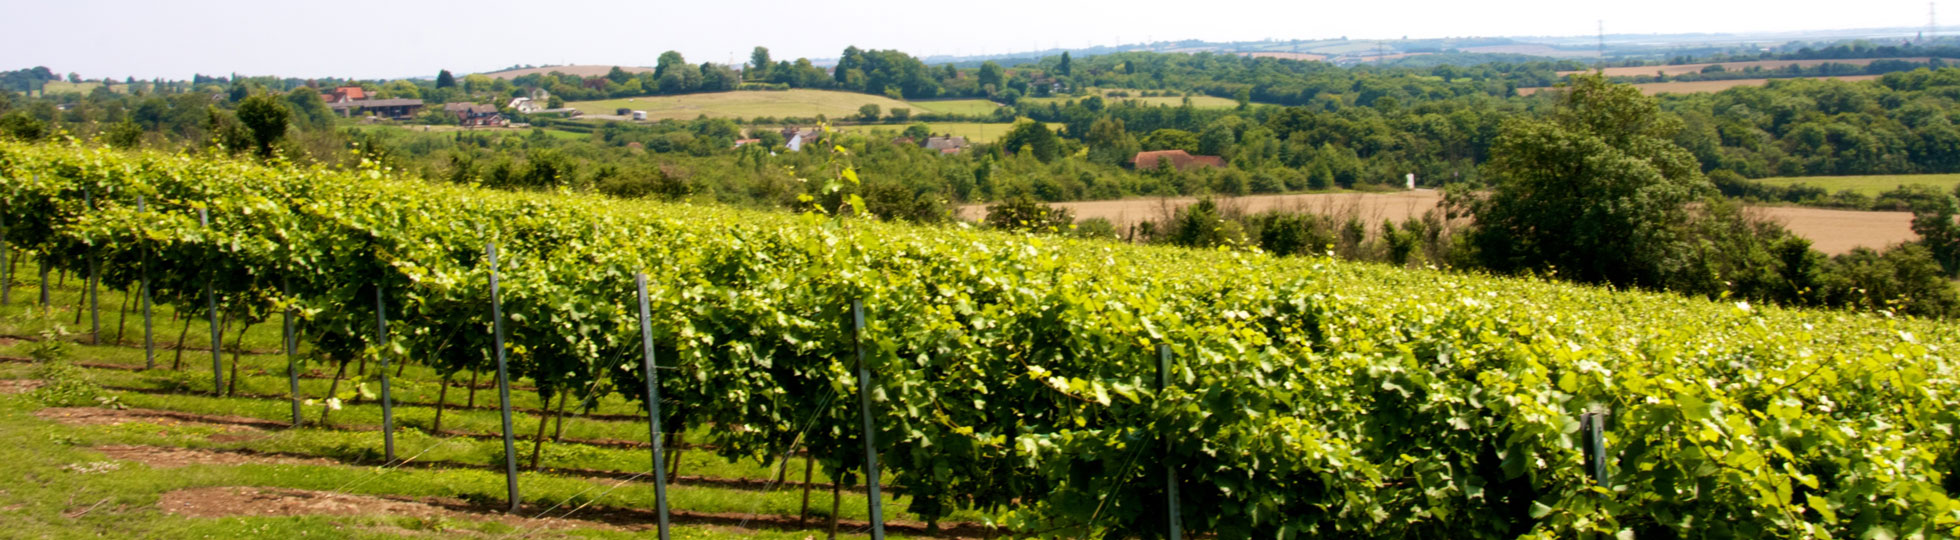 South facing slopes of Chardonnay vines